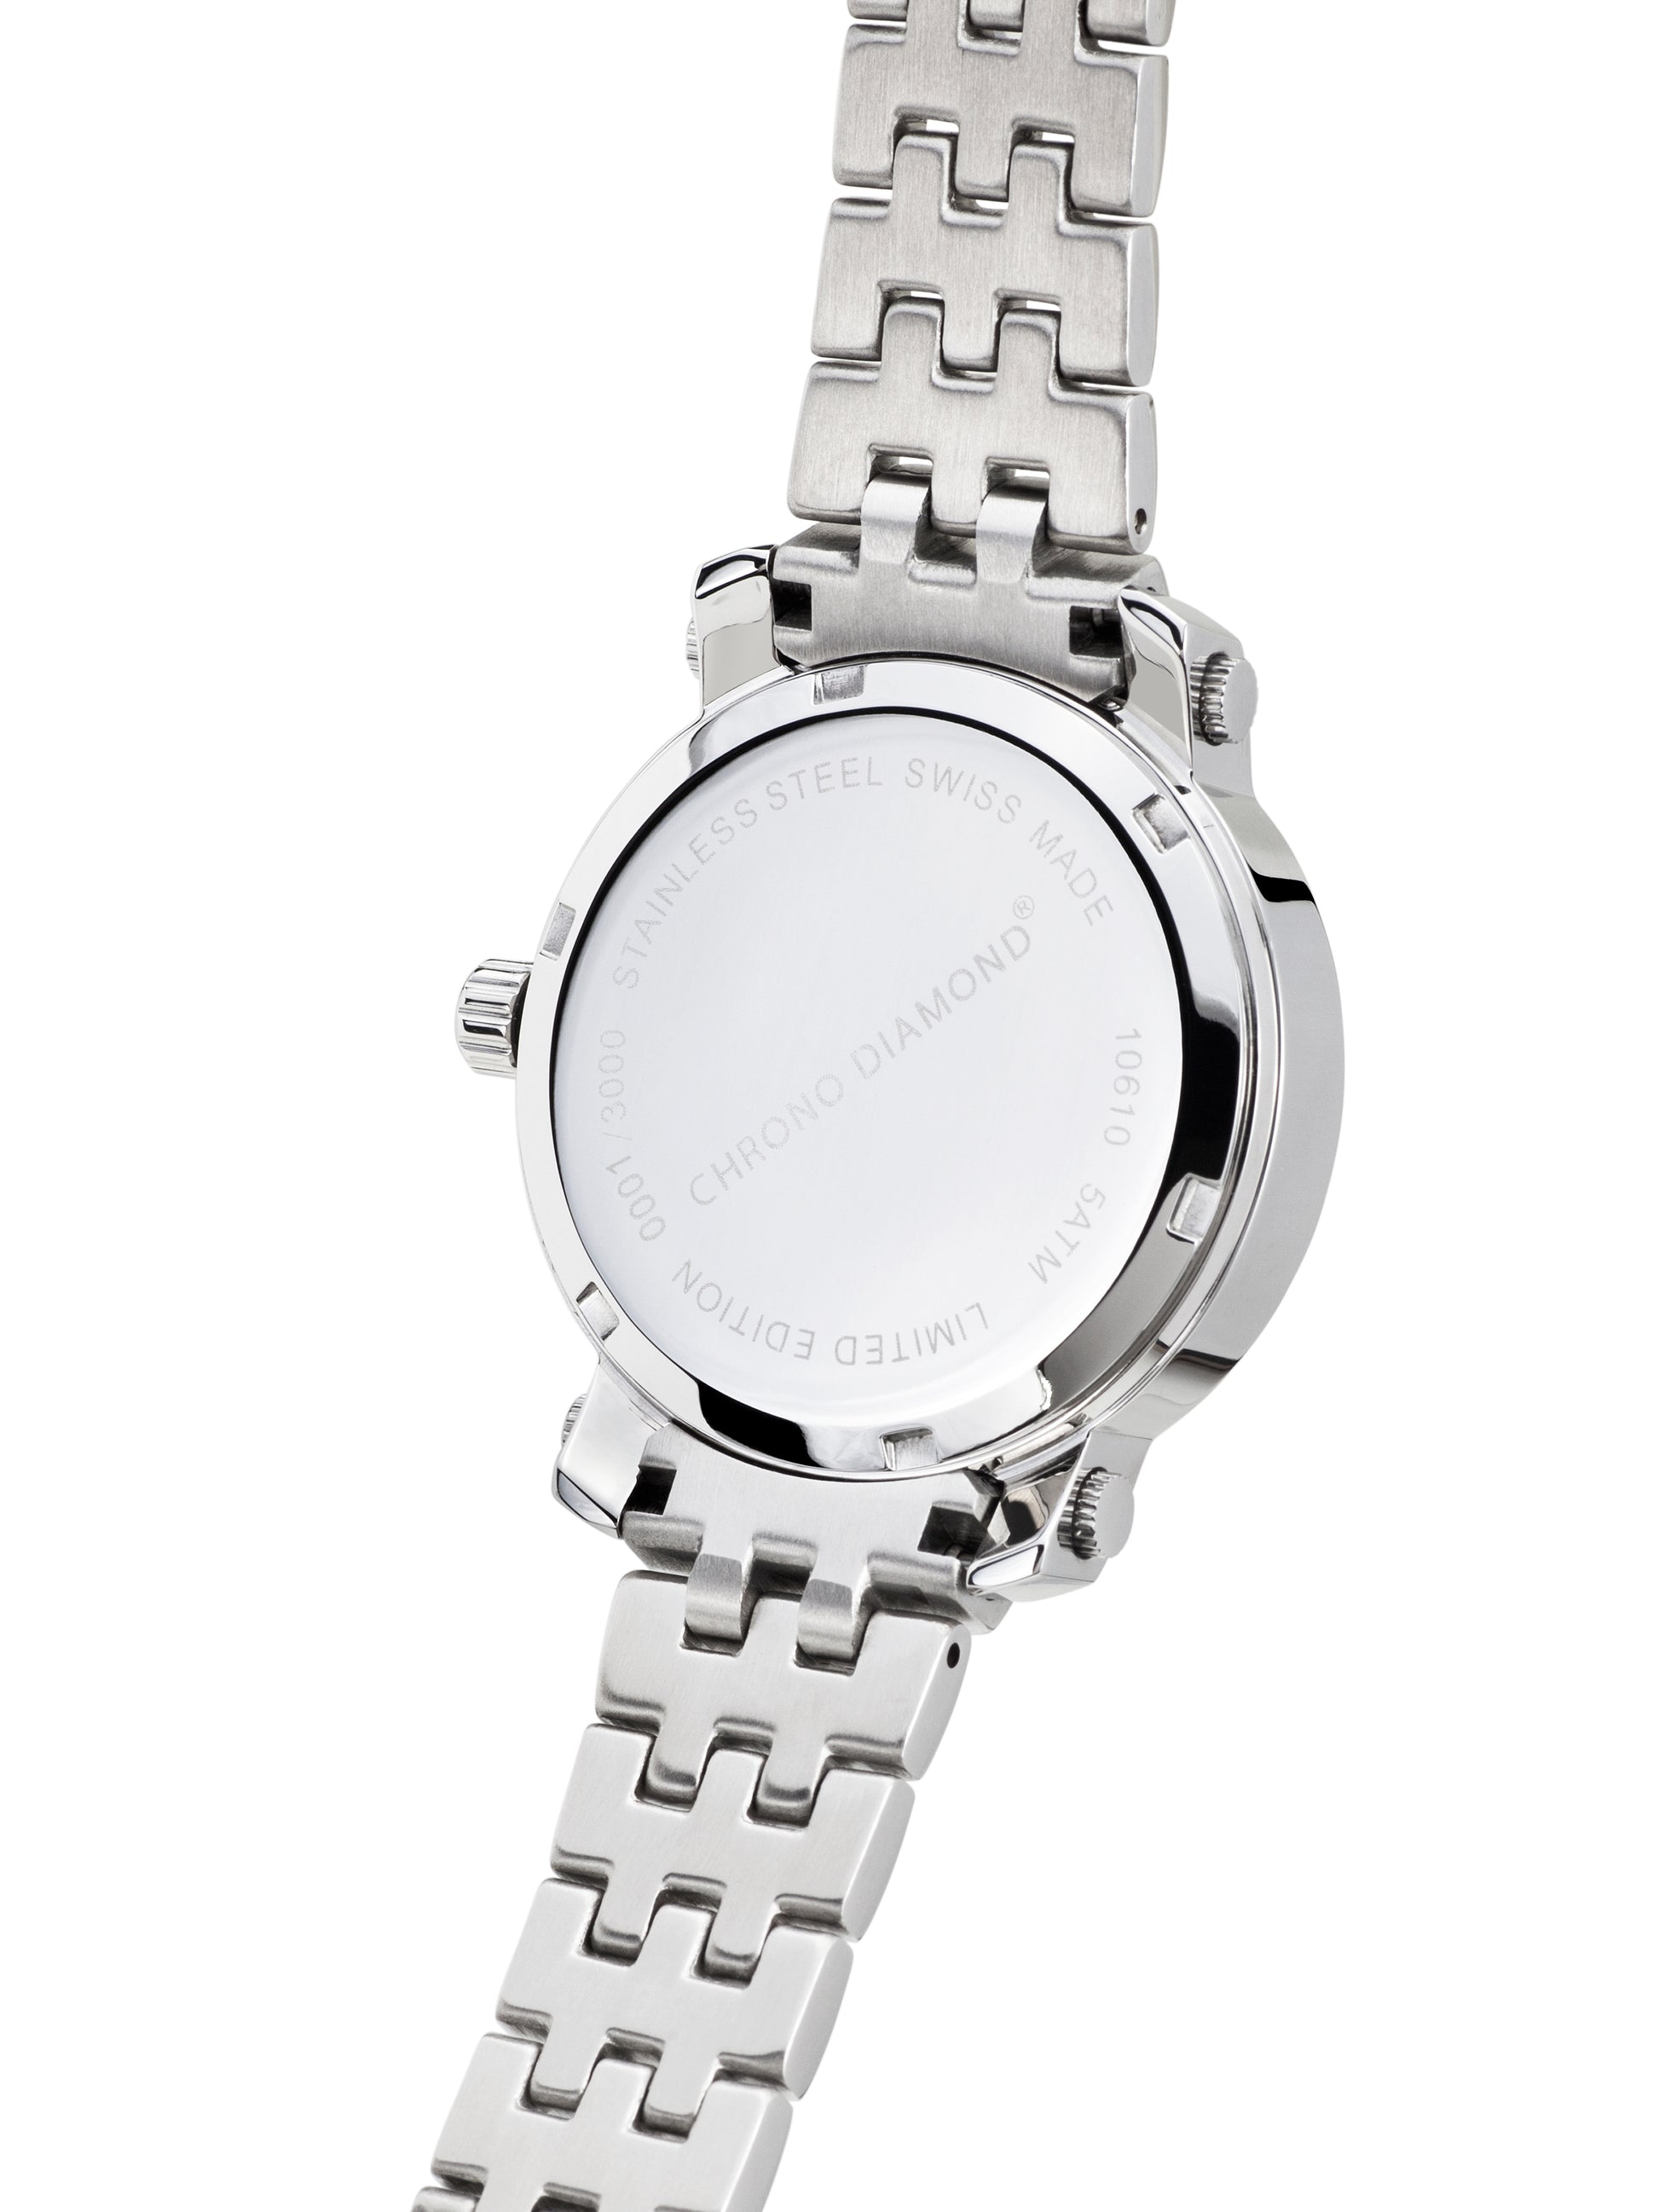 Automatic watches — Nesta — Chrono Diamond — steel silver